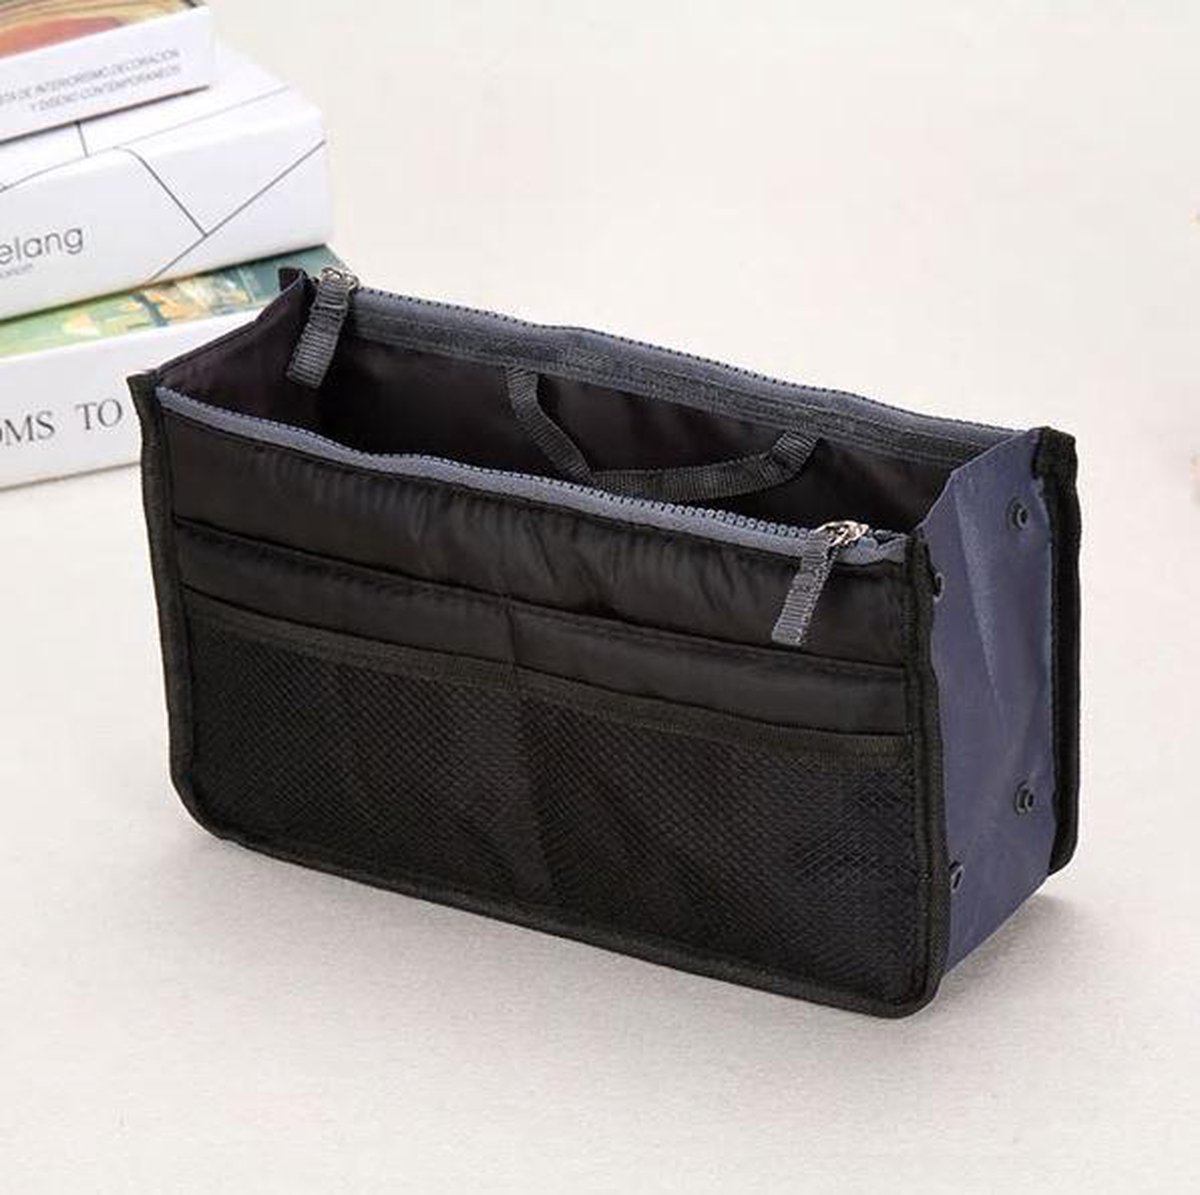 krijgen Het beste chrysant Bag in bag tas organizer – 11 vakken – zwart | bol.com